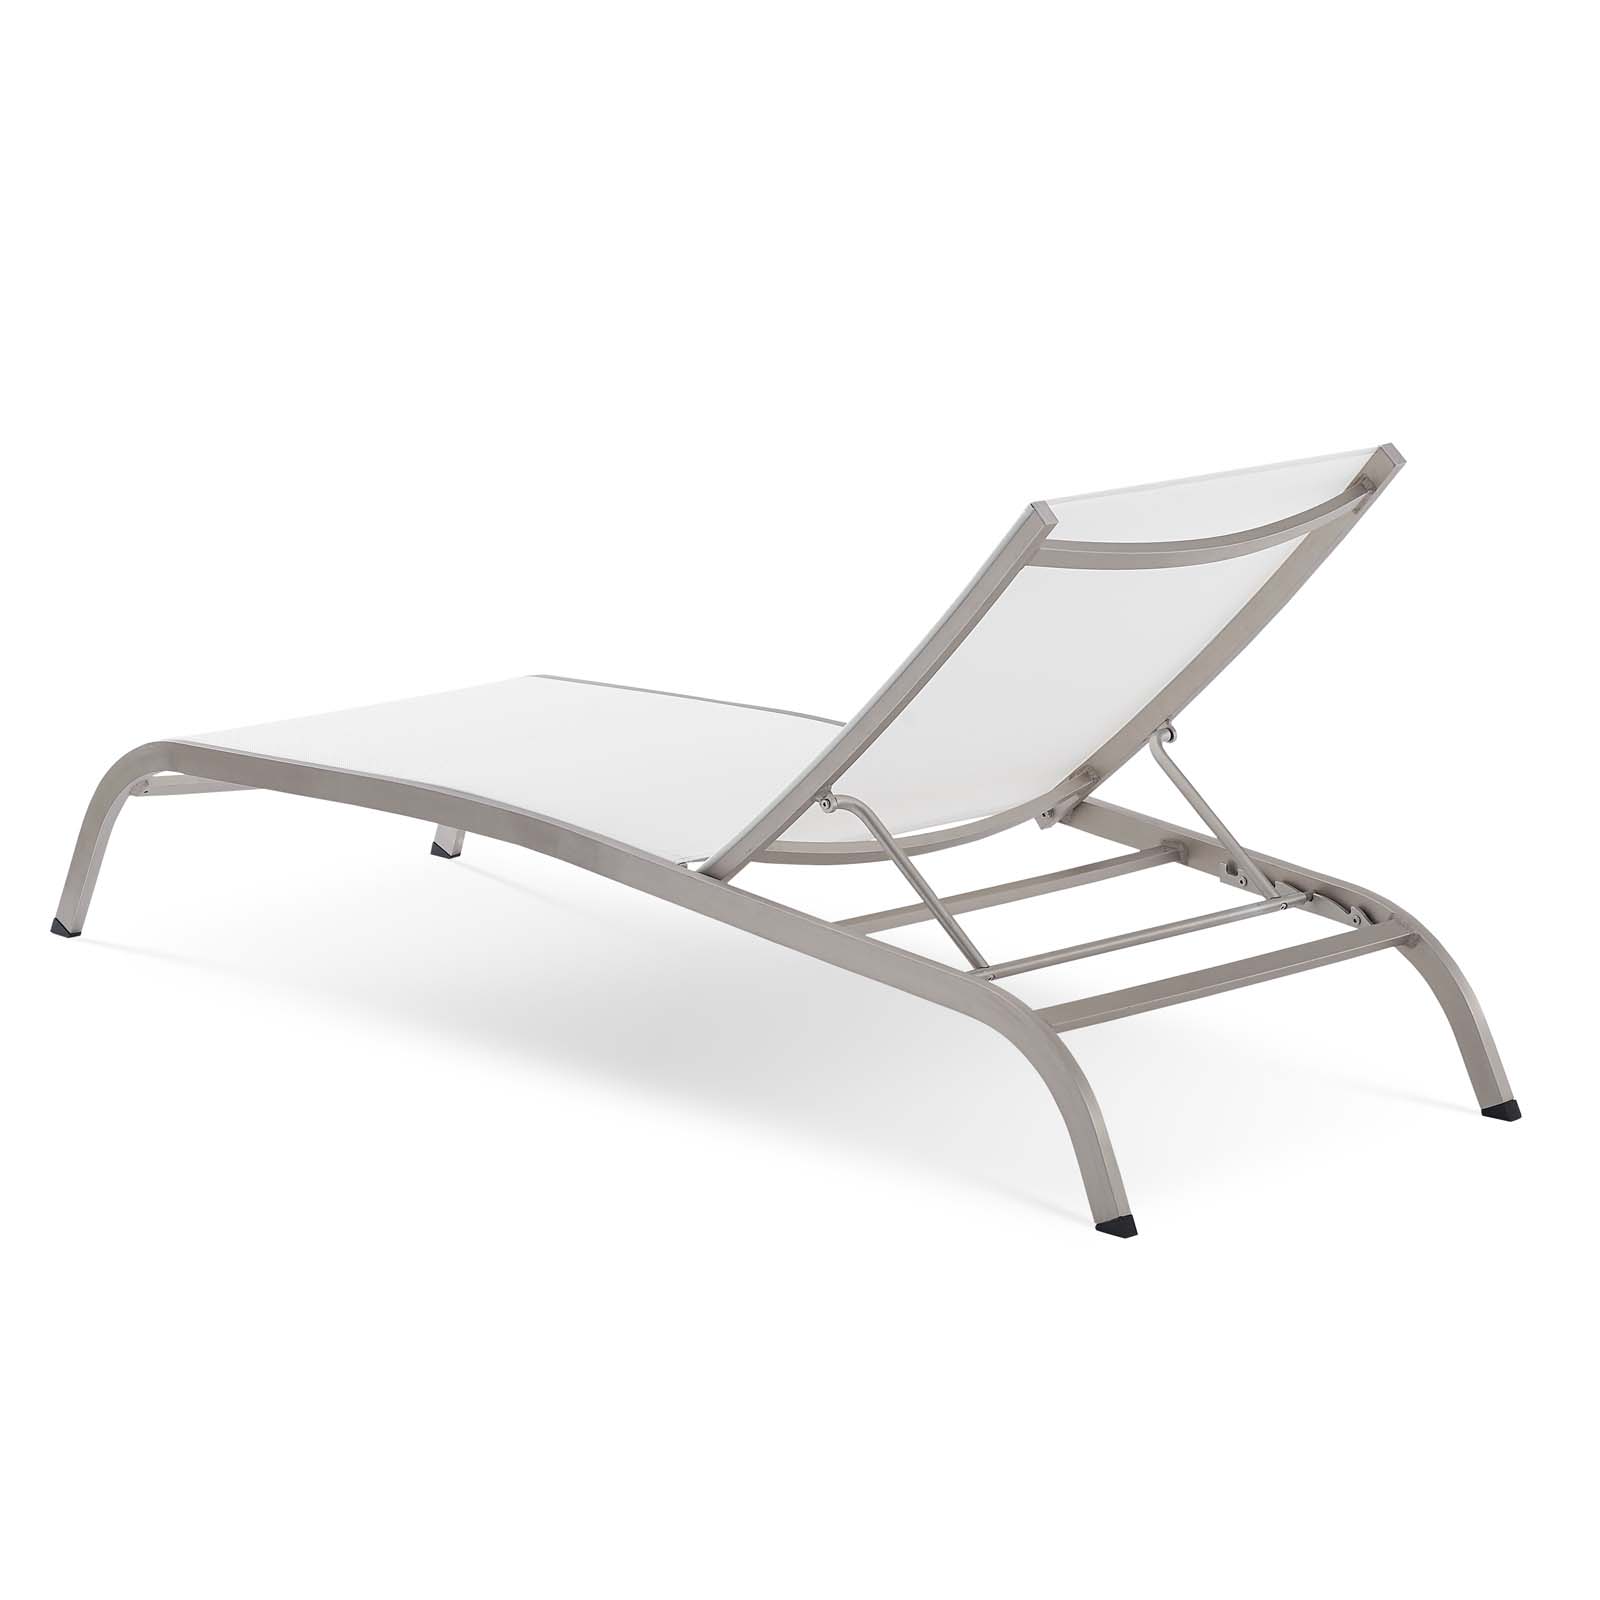 Contemporary Modern Urban Designer Outdoor Patio Balcony Garden Furniture Lounge Lounge Chair, Aluminum, White - image 2 of 6